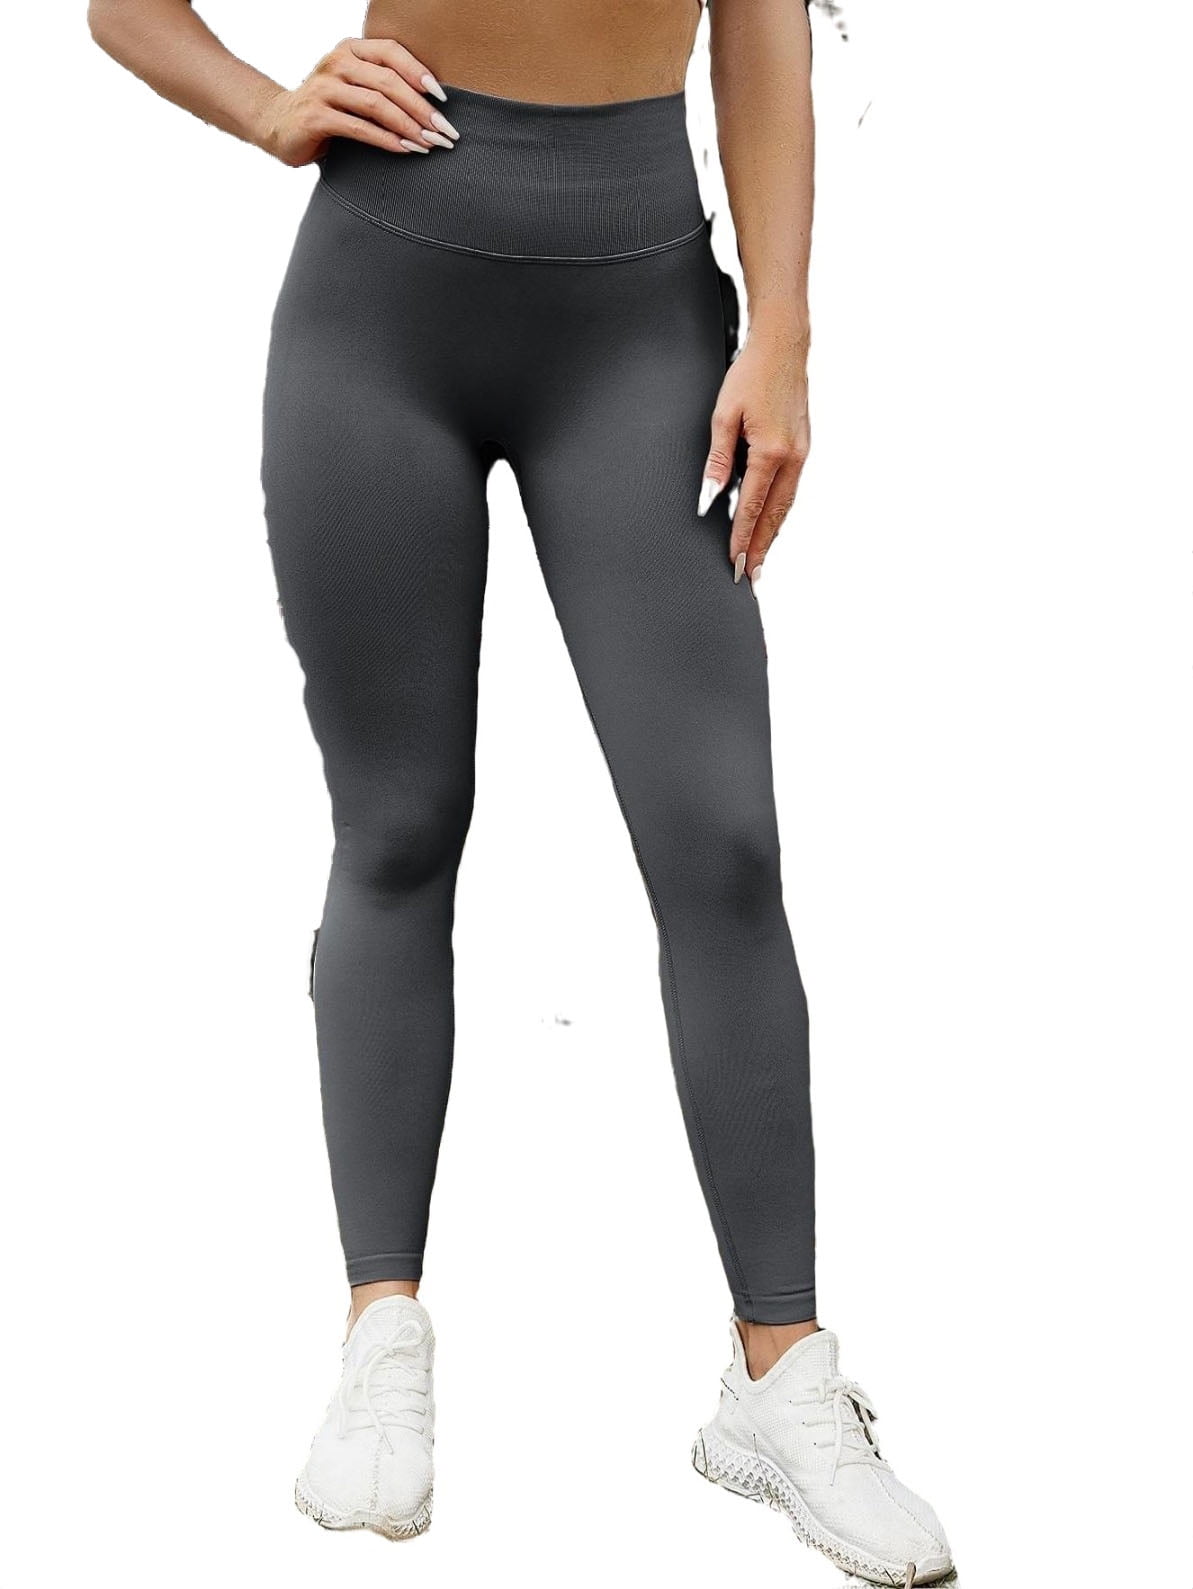 Seamless Sports Leggings - Dark gray - Ladies | H&M US